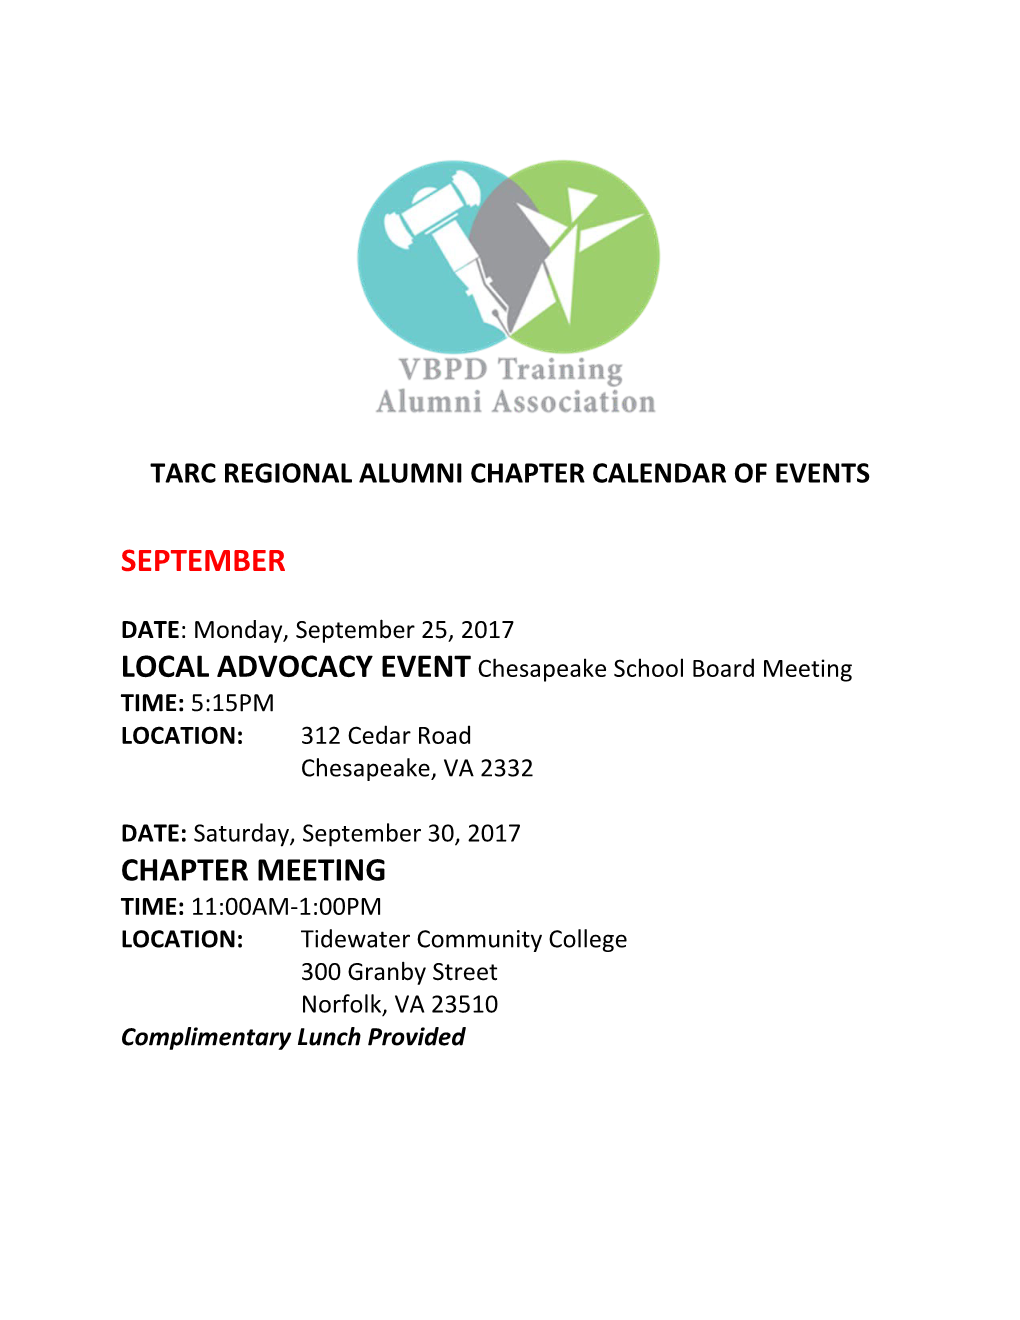 Tarc Regional Alumni Chapter Calendar of Events